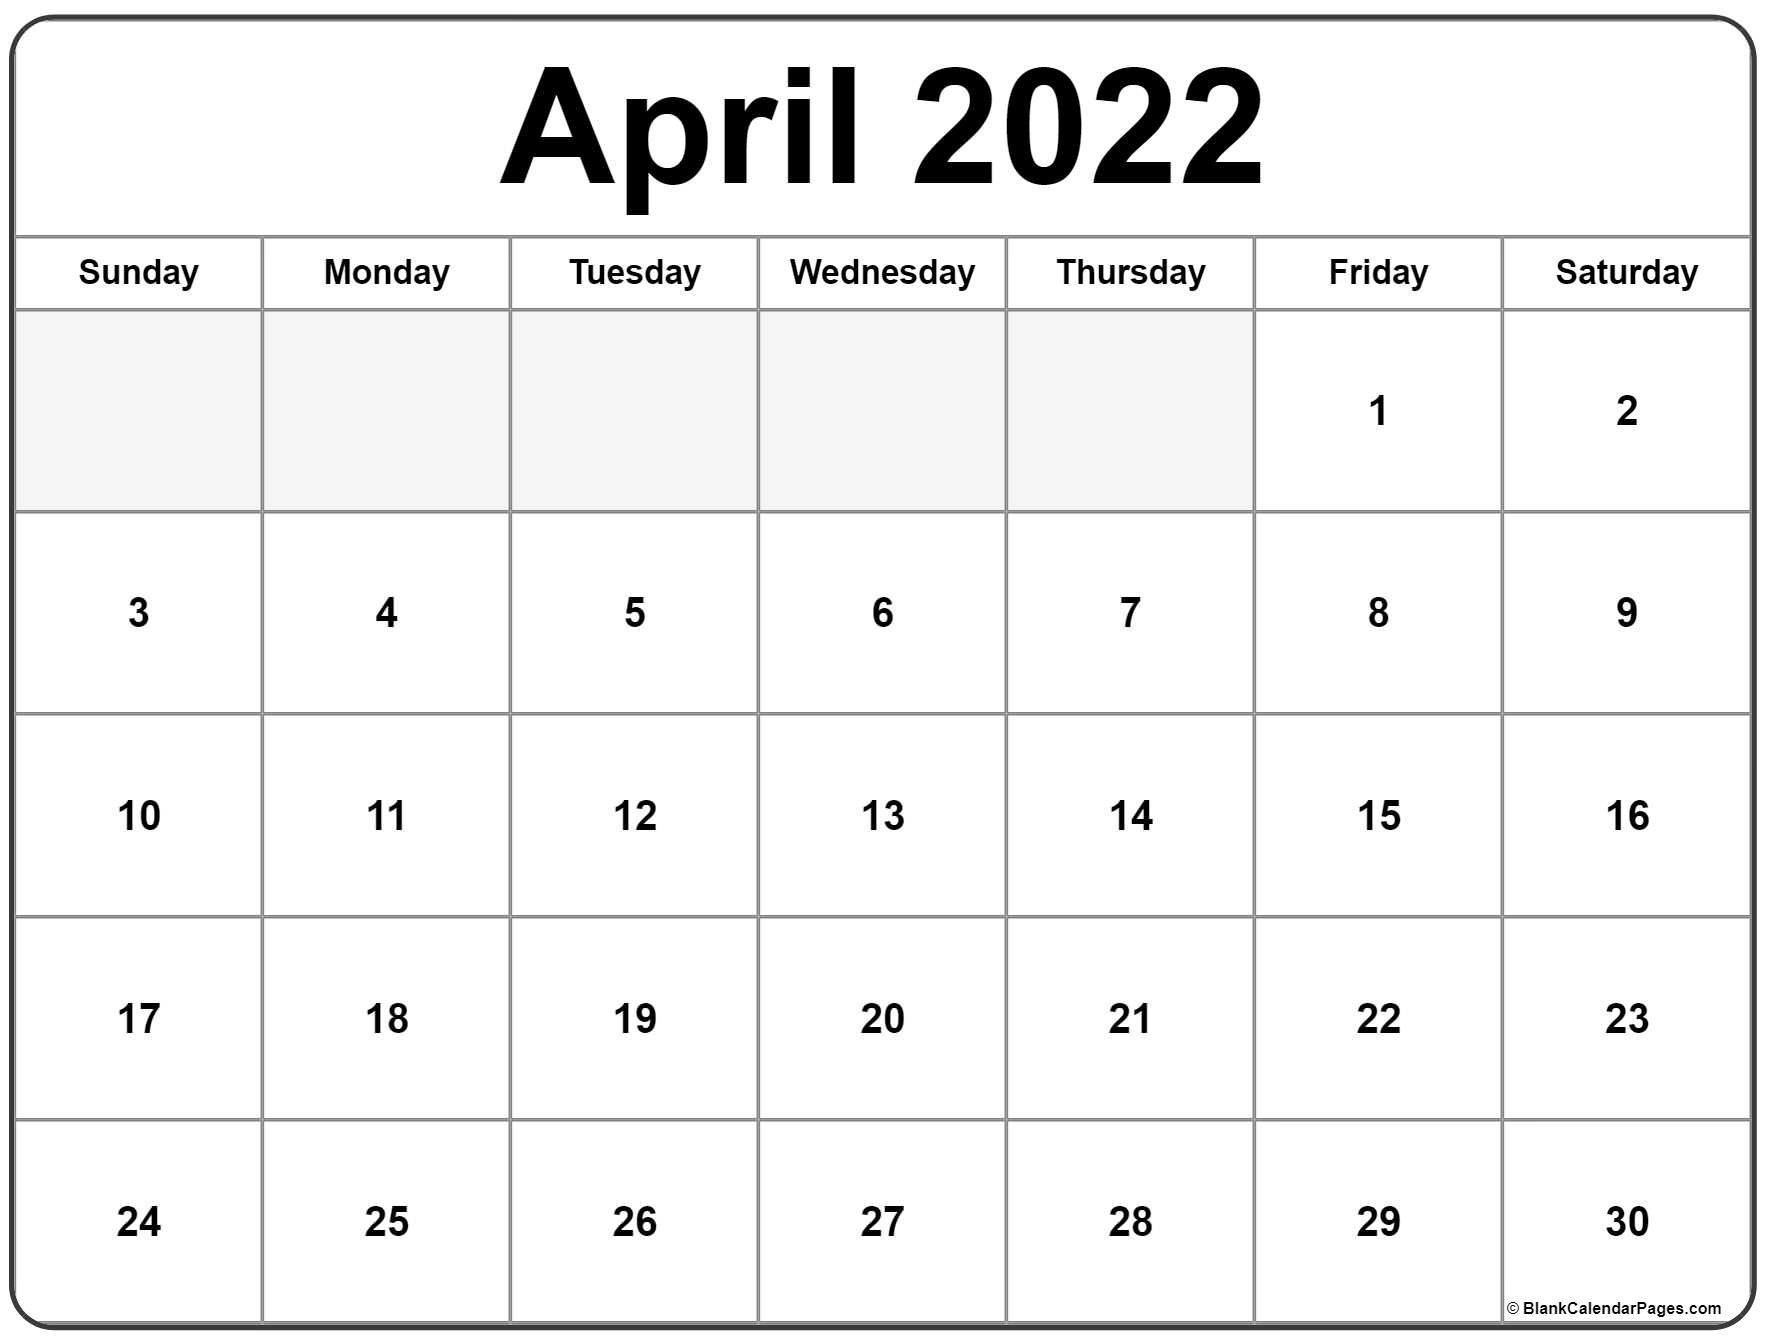 Monthly Calendar April 2022